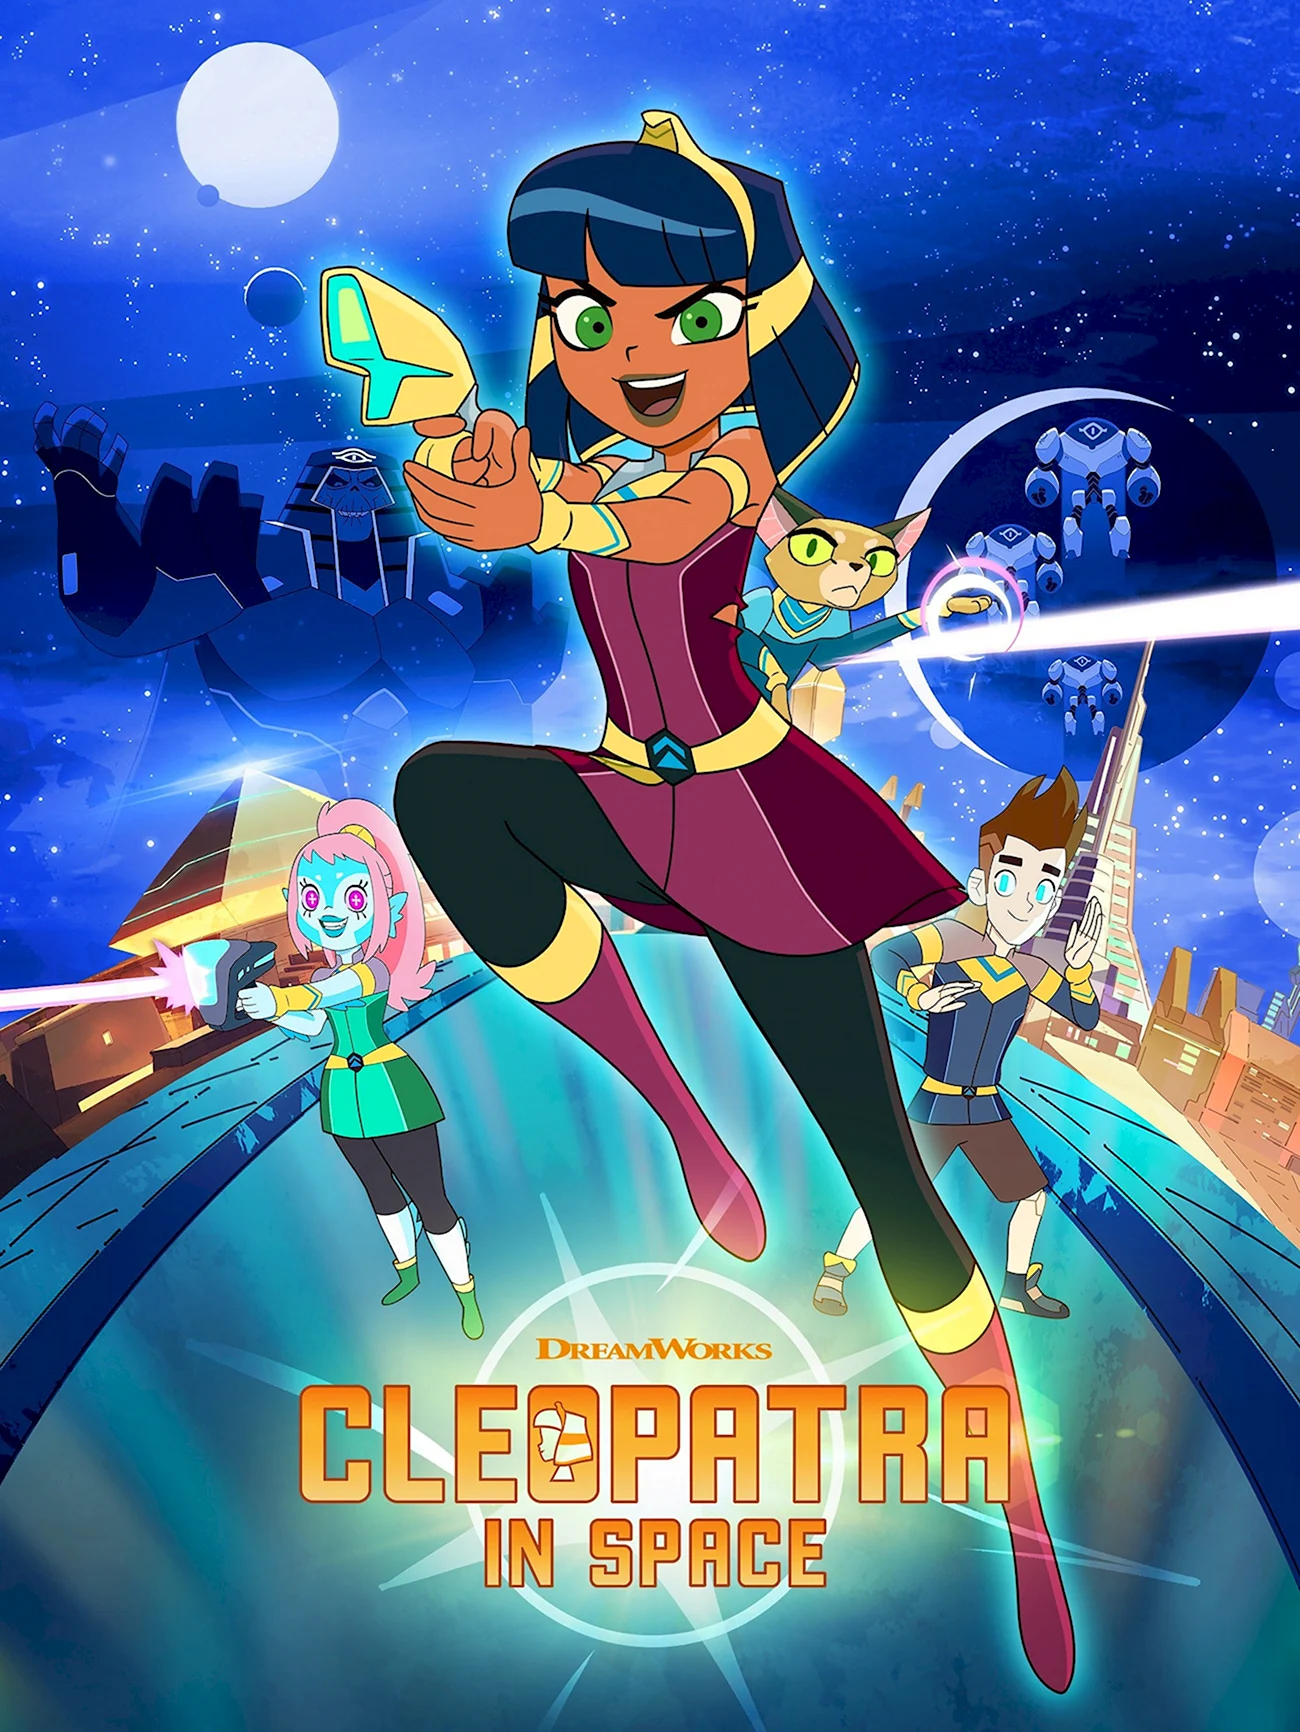 Cleopatra in Space мультсериал. Картинка из мультфильма